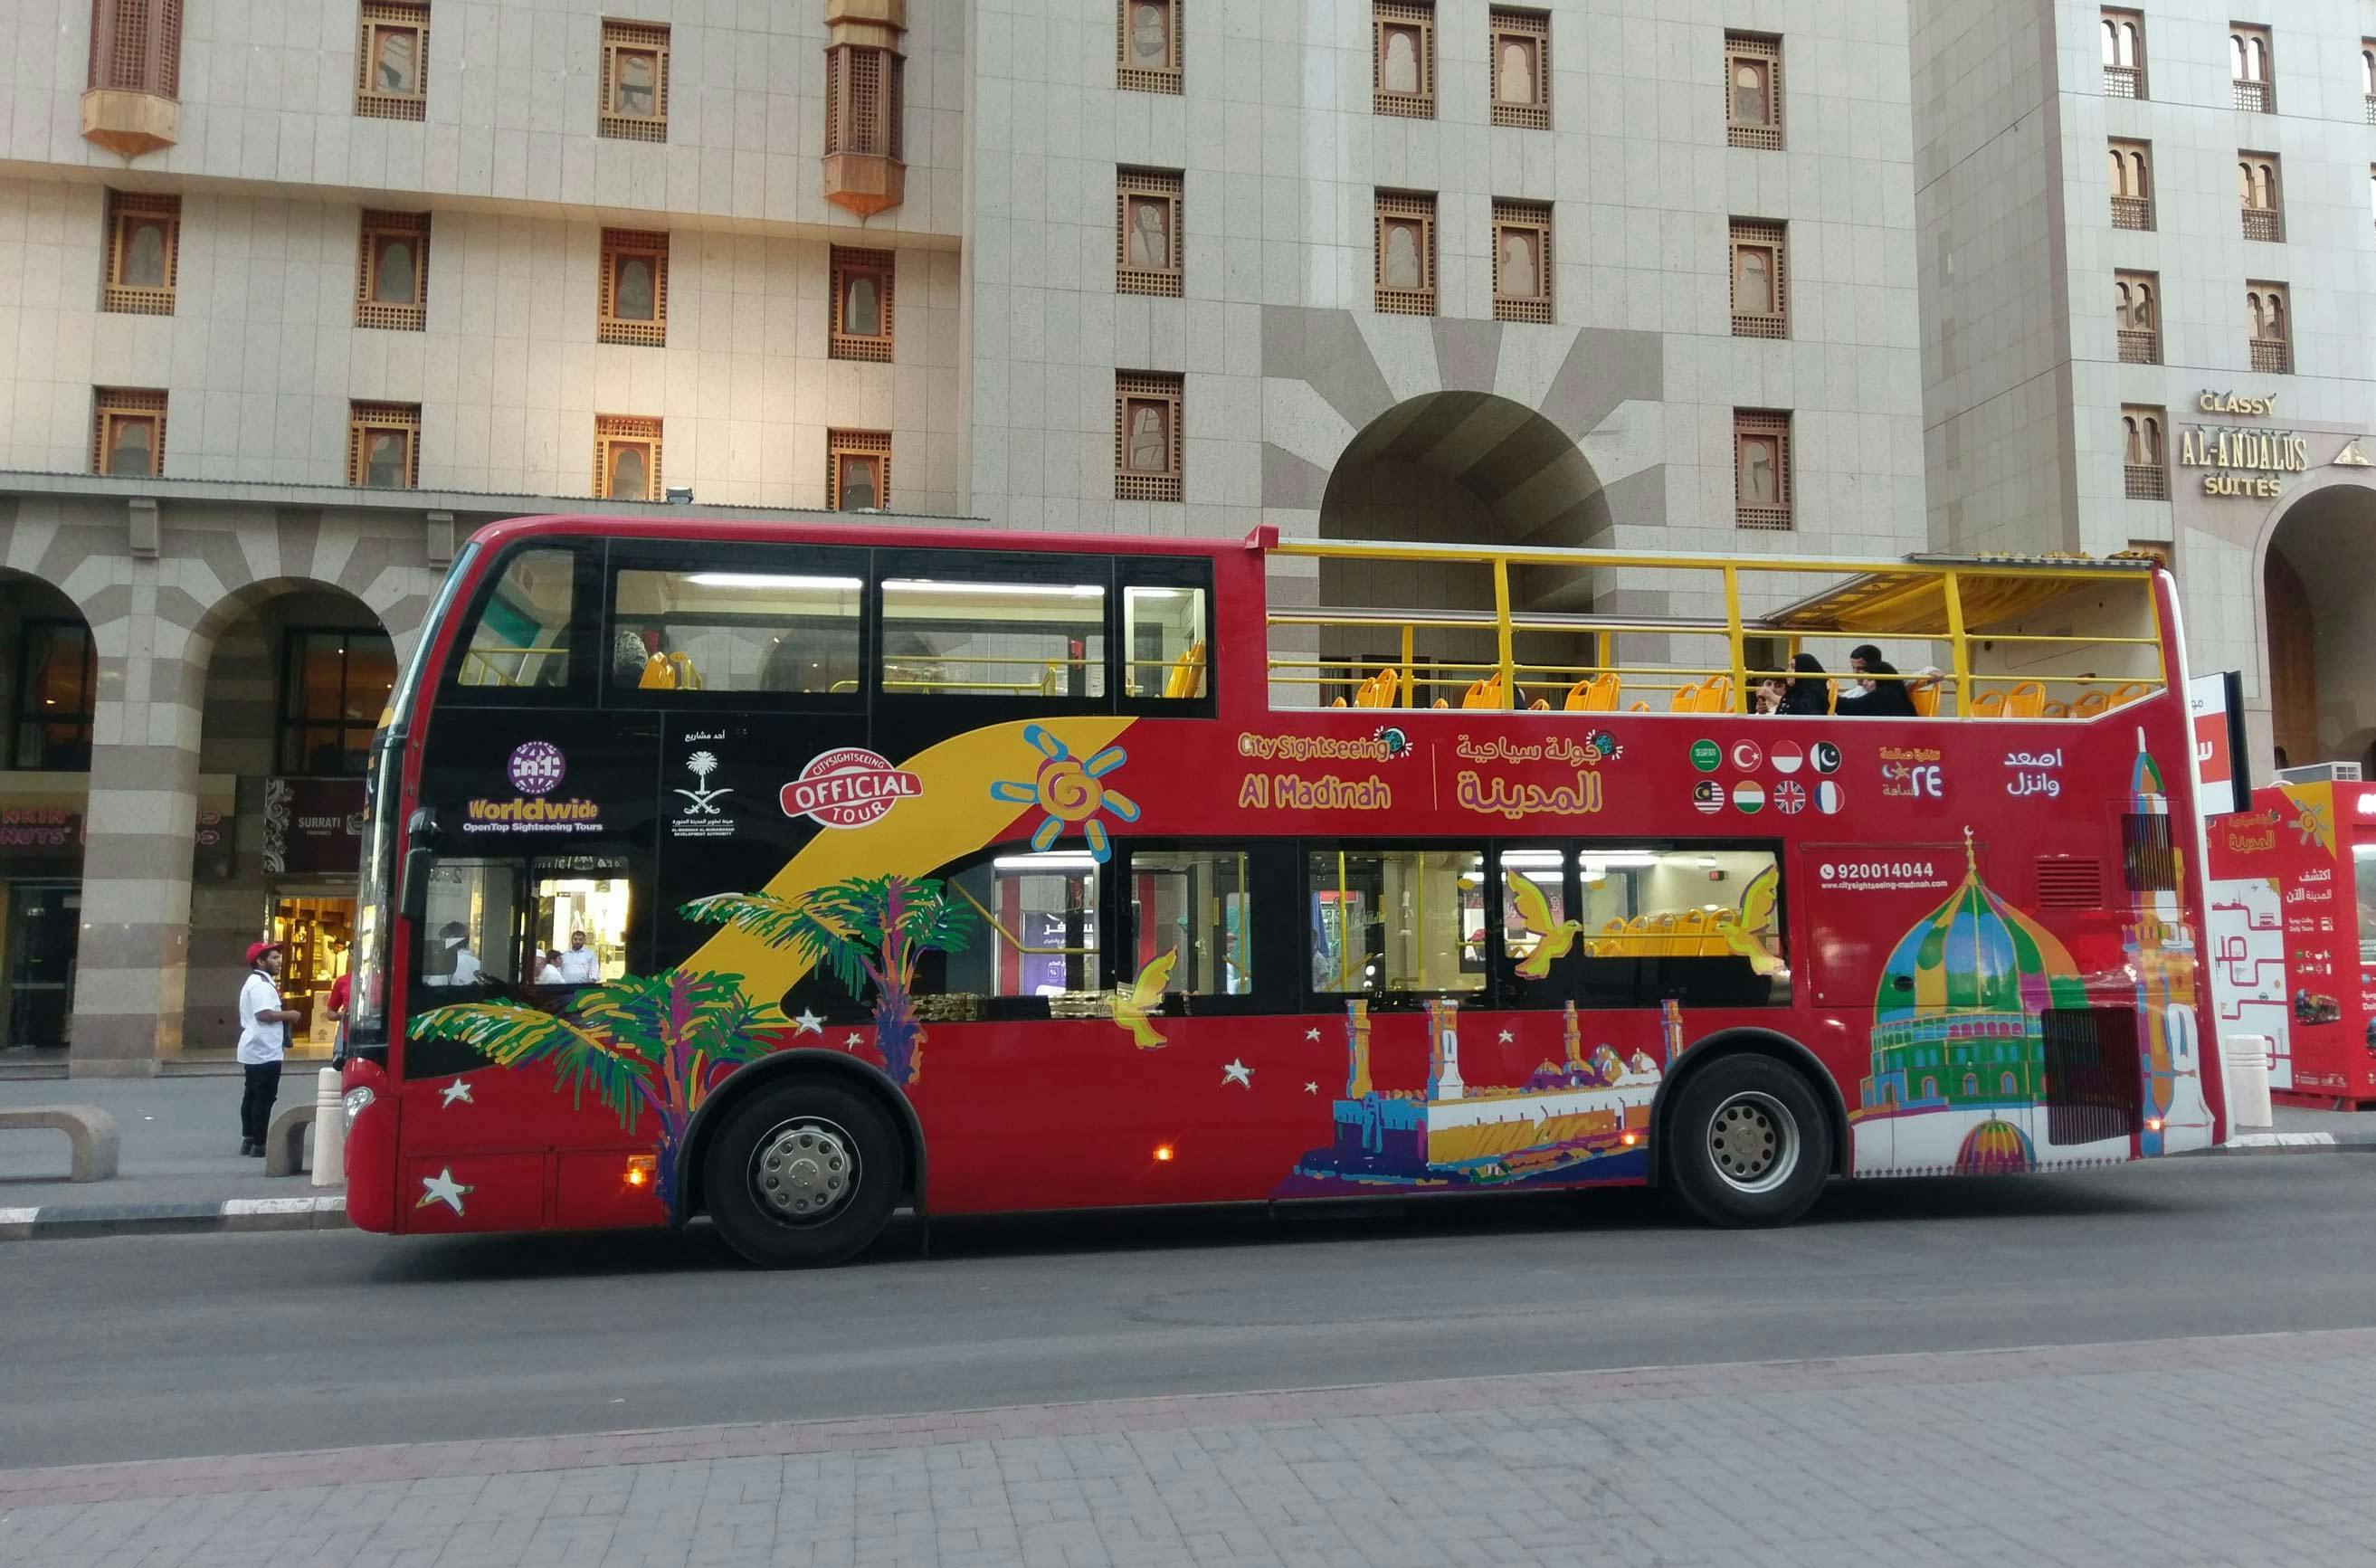 Wycieczka autobusowa typu hop-on hop-off po Al Madinah w ramach City Sightseeing